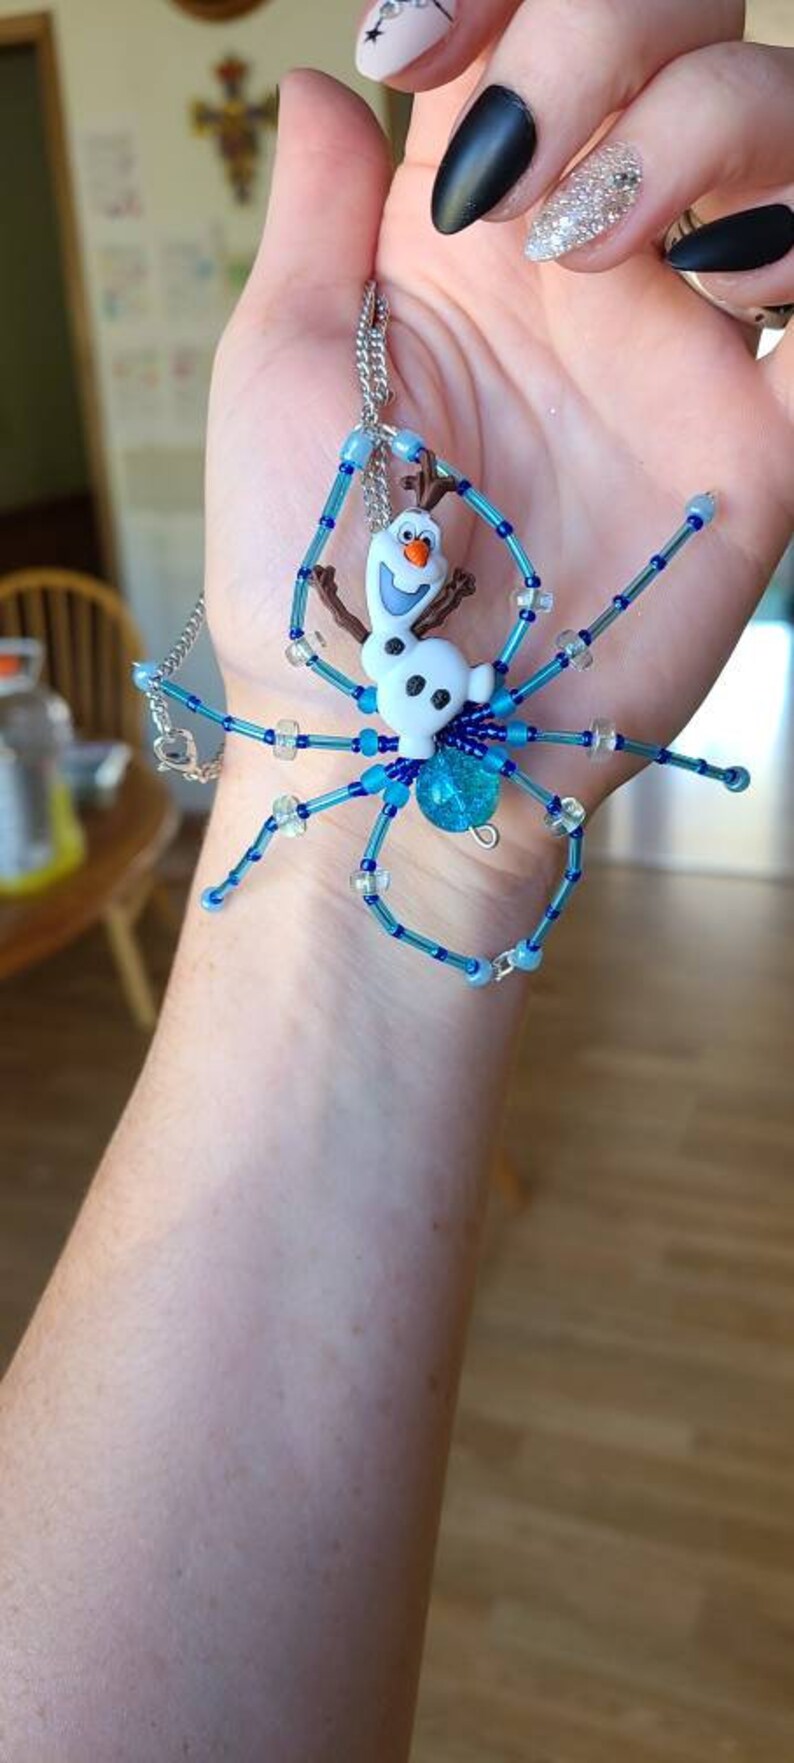 Olaf beaded spider